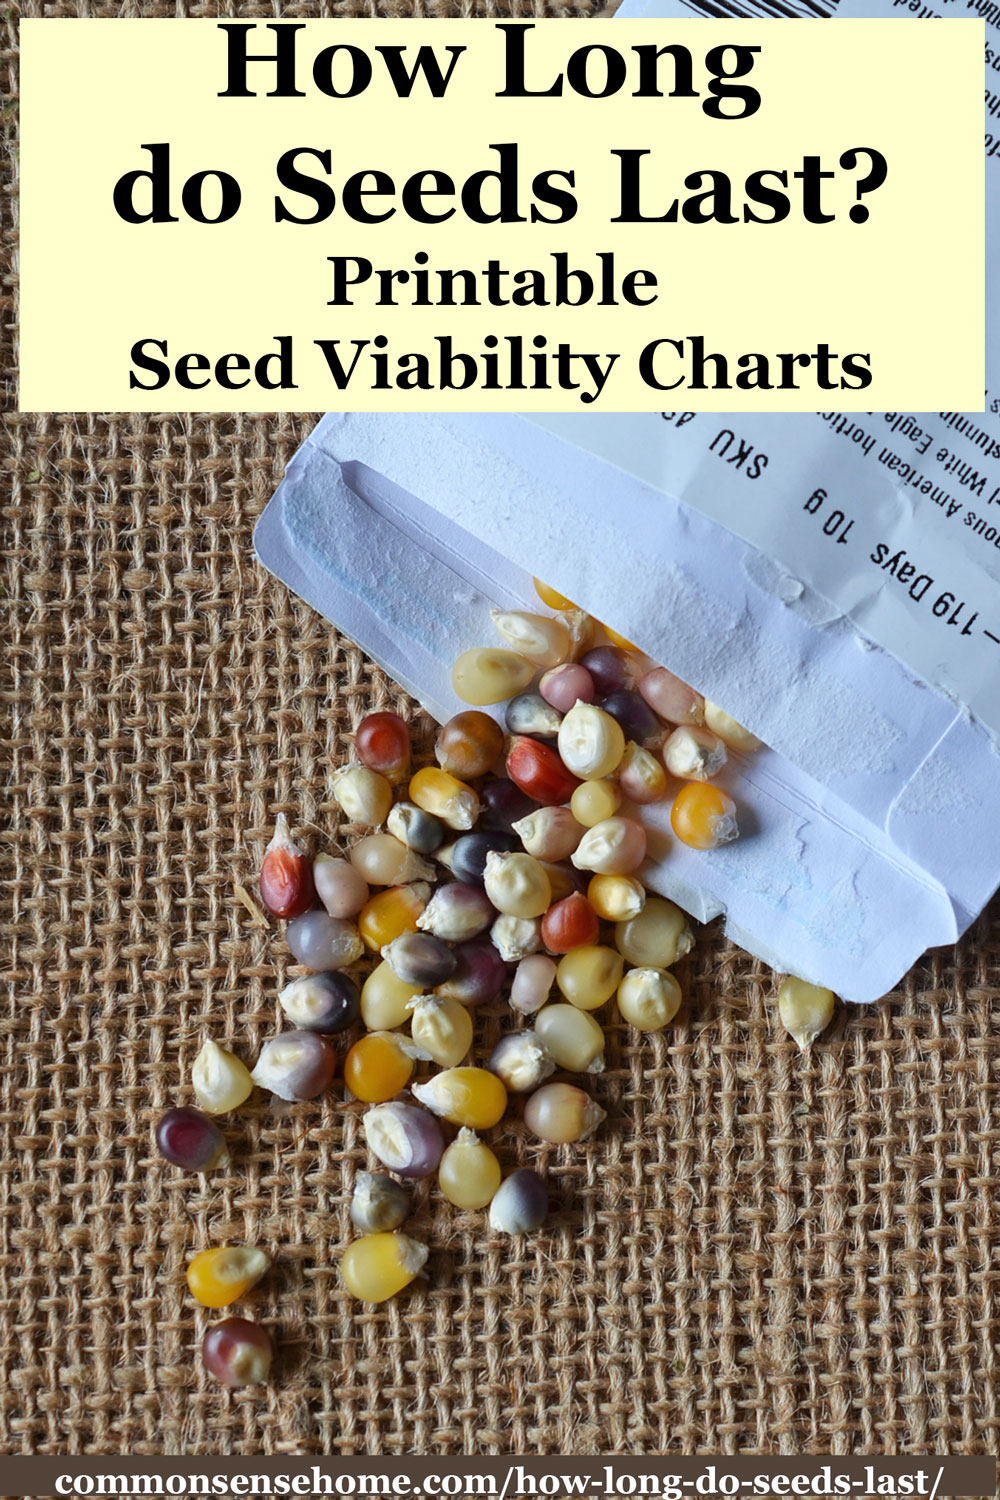 How Long do Seeds Last? (w/ Printable Seed Viability Charts)